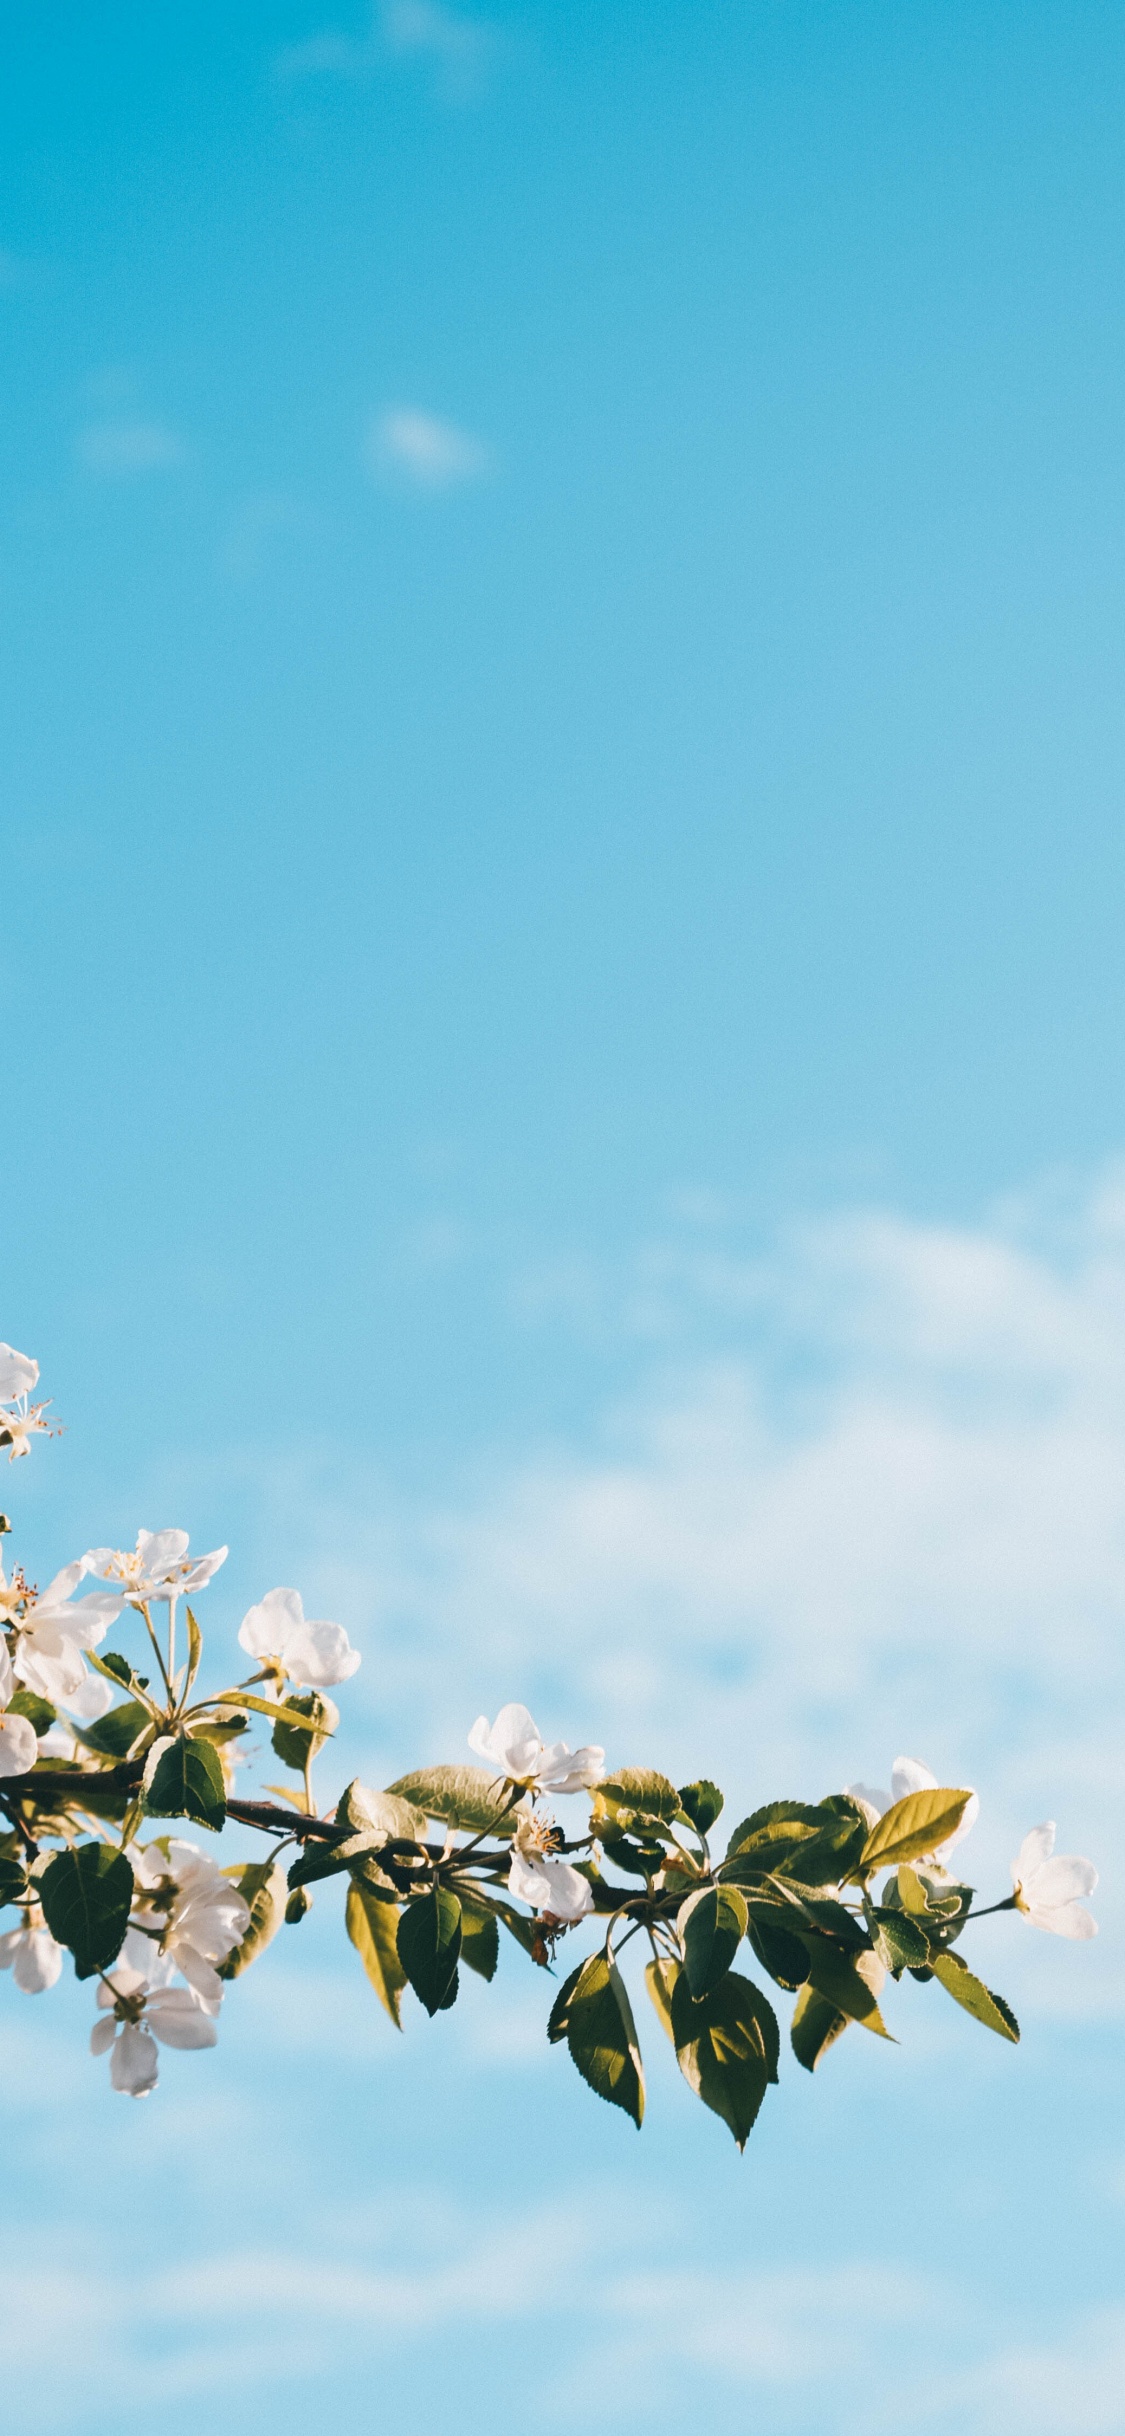 White Cherry Blossom Under Blue Sky During Daytime. Wallpaper in 1125x2436 Resolution